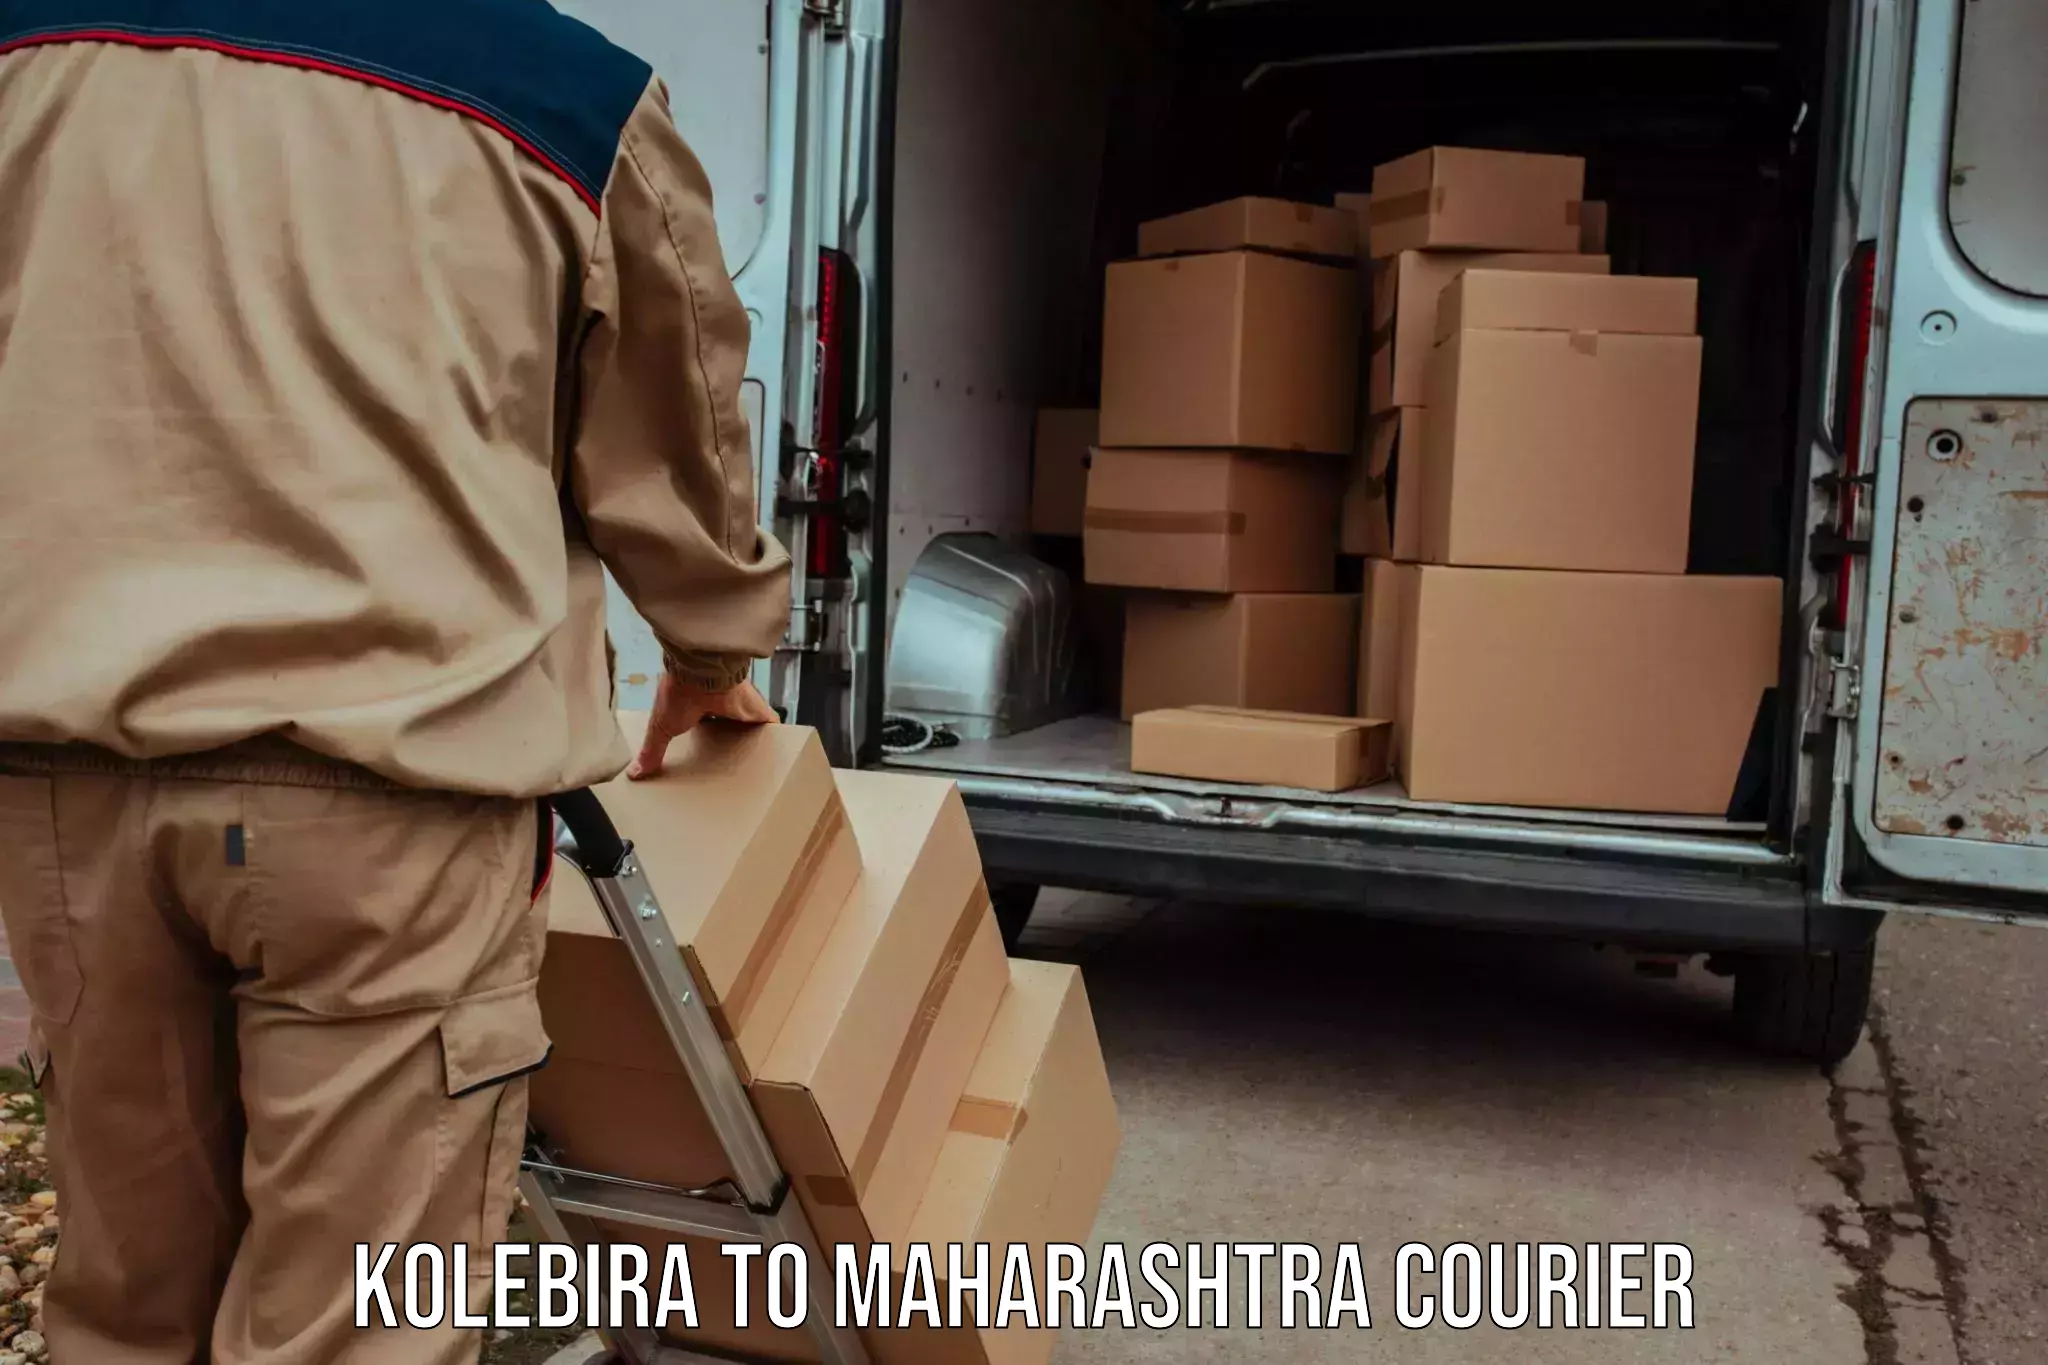 Quick dispatch service in Kolebira to Maharashtra